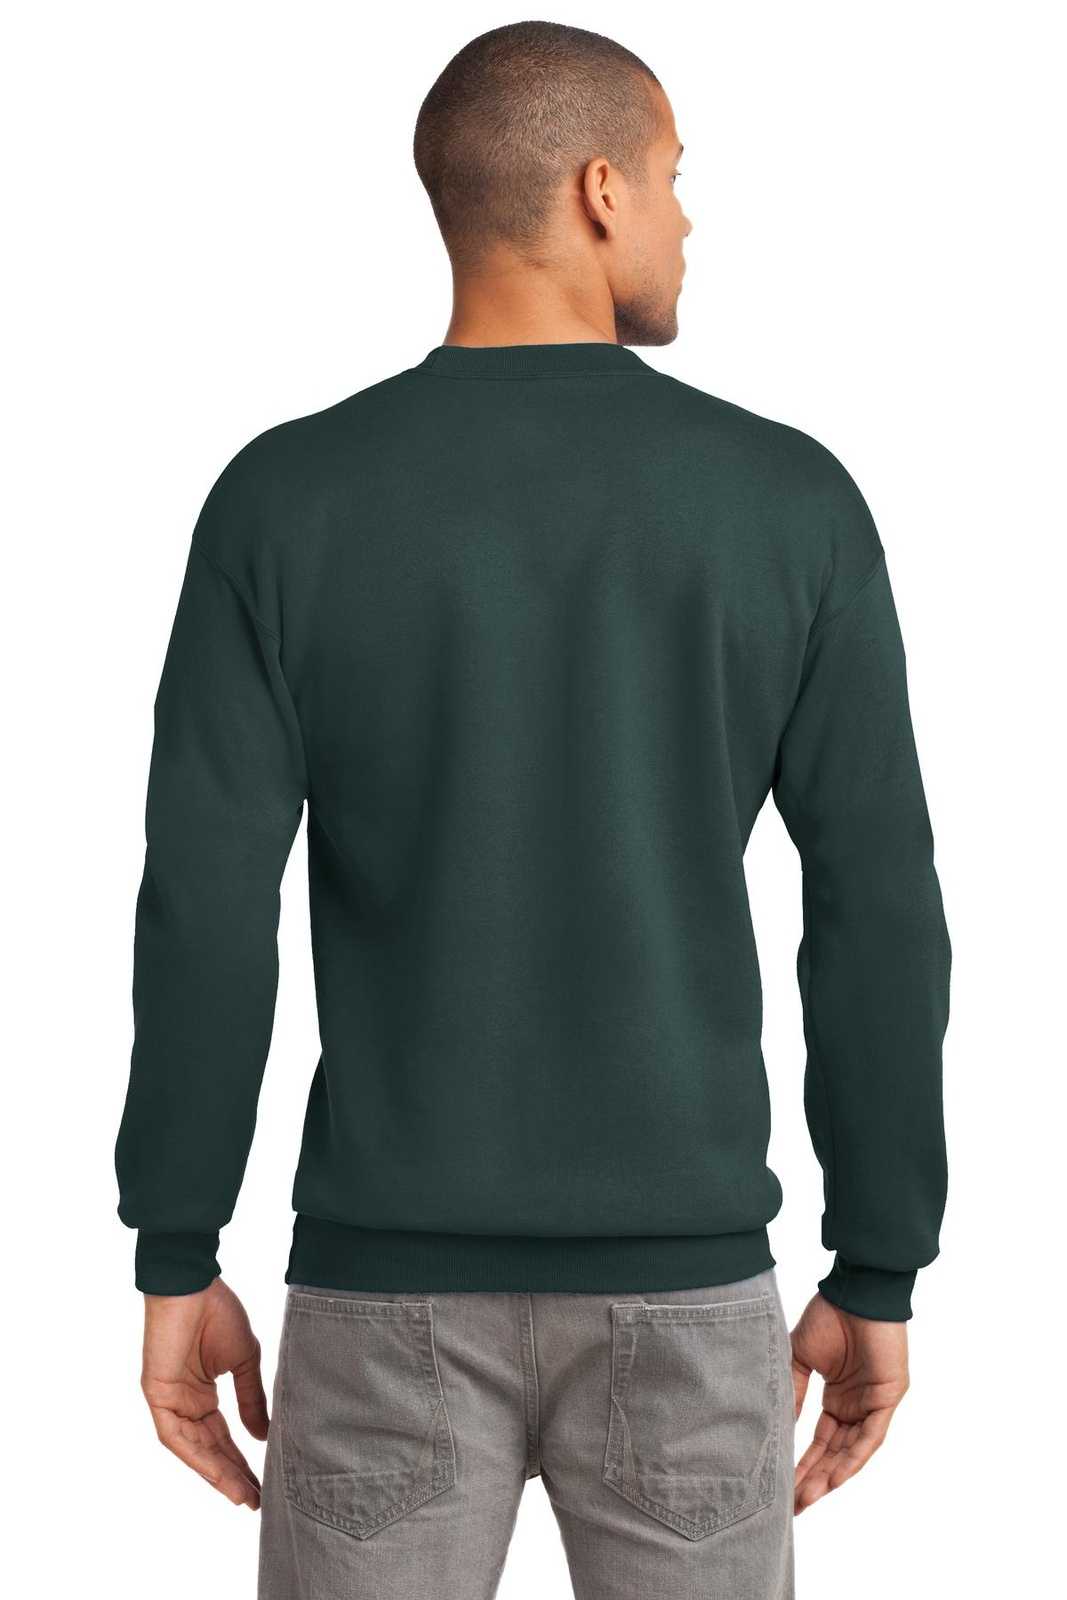 Port & Company PC90T Tall Essential Fleece Crewneck Sweatshirt - Dark Green - HIT a Double - 1